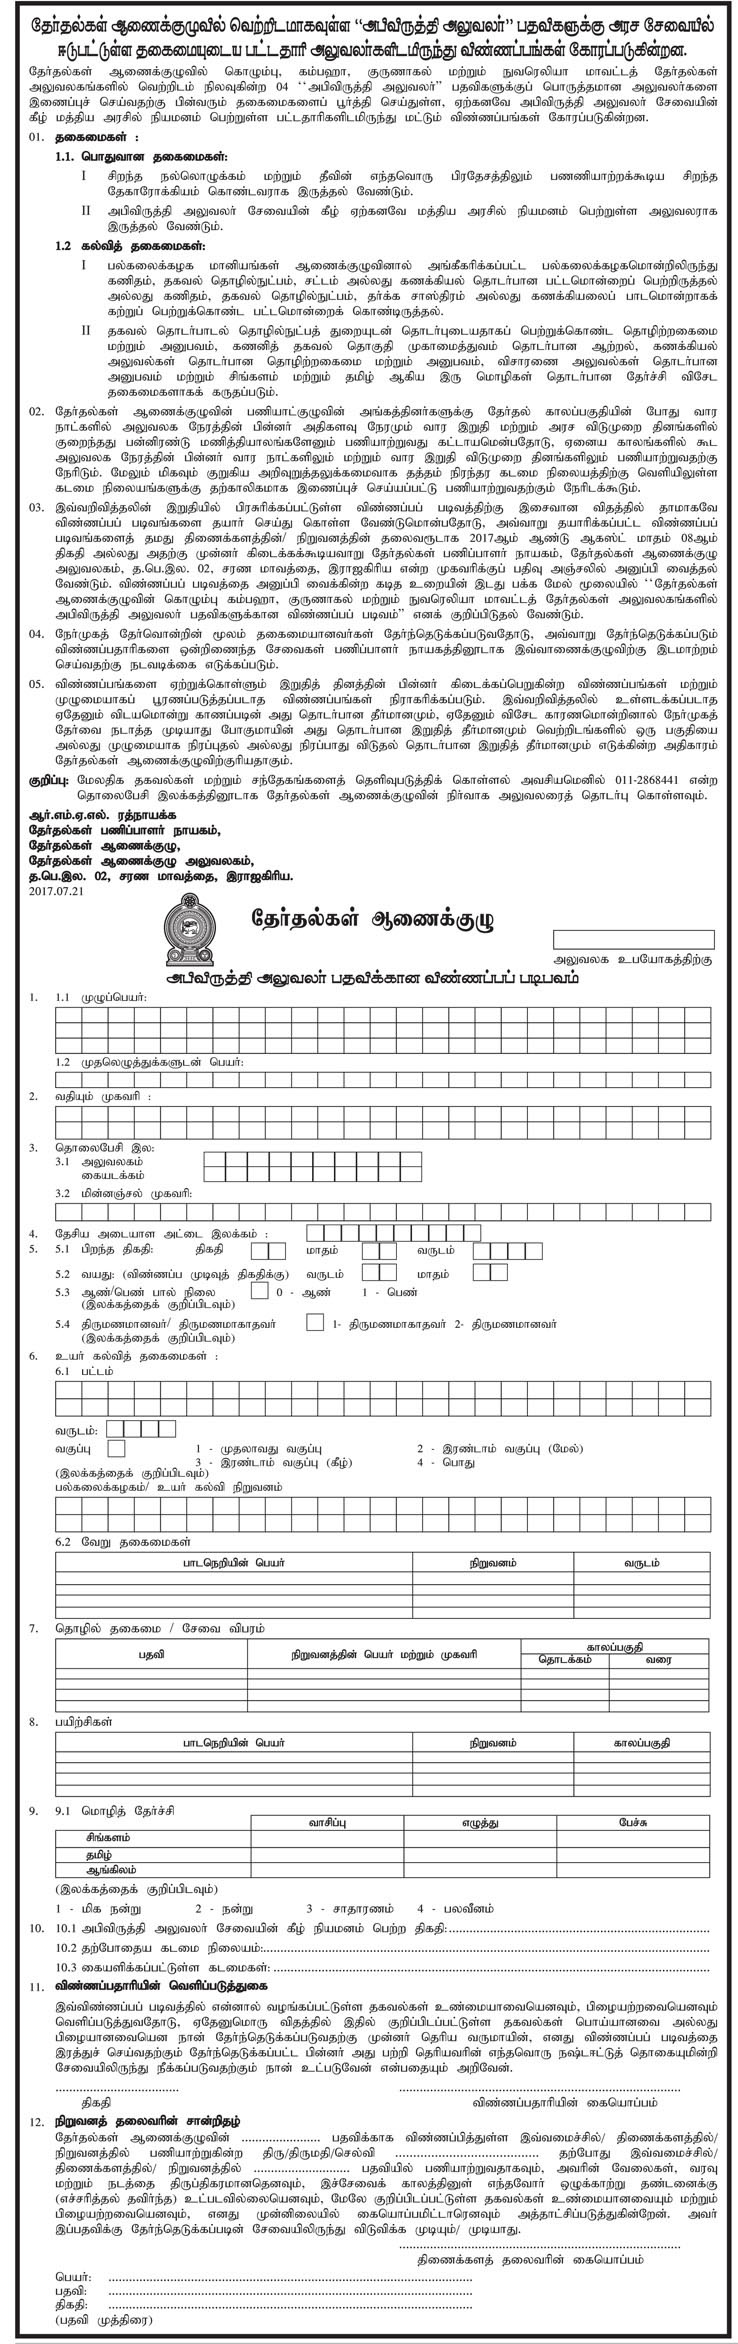 Election Commission of Sri Lanka Development Officer